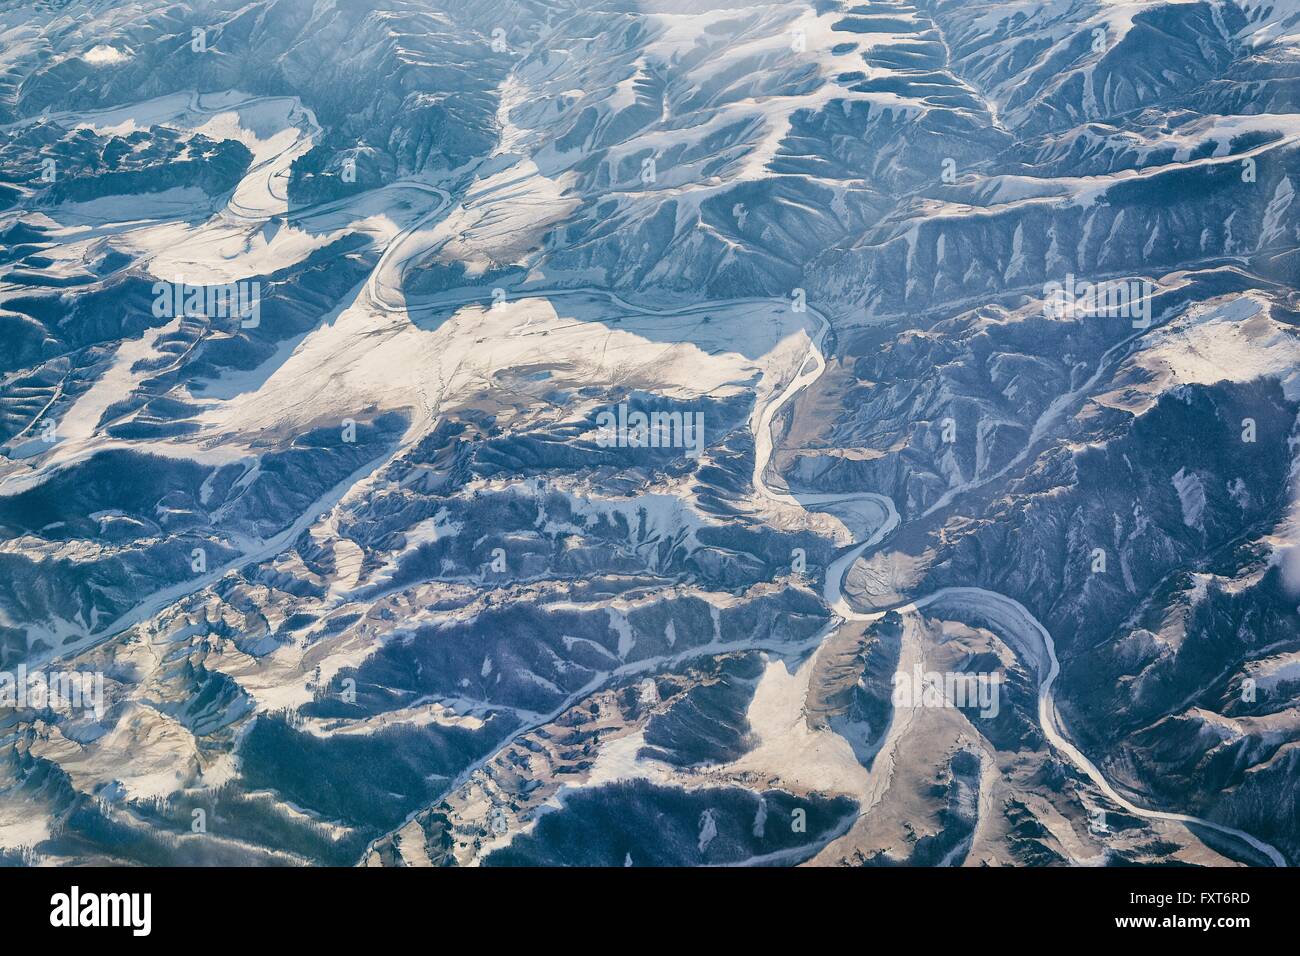 Aerial view of snow capped mountain range, Mongolia Stock Photo